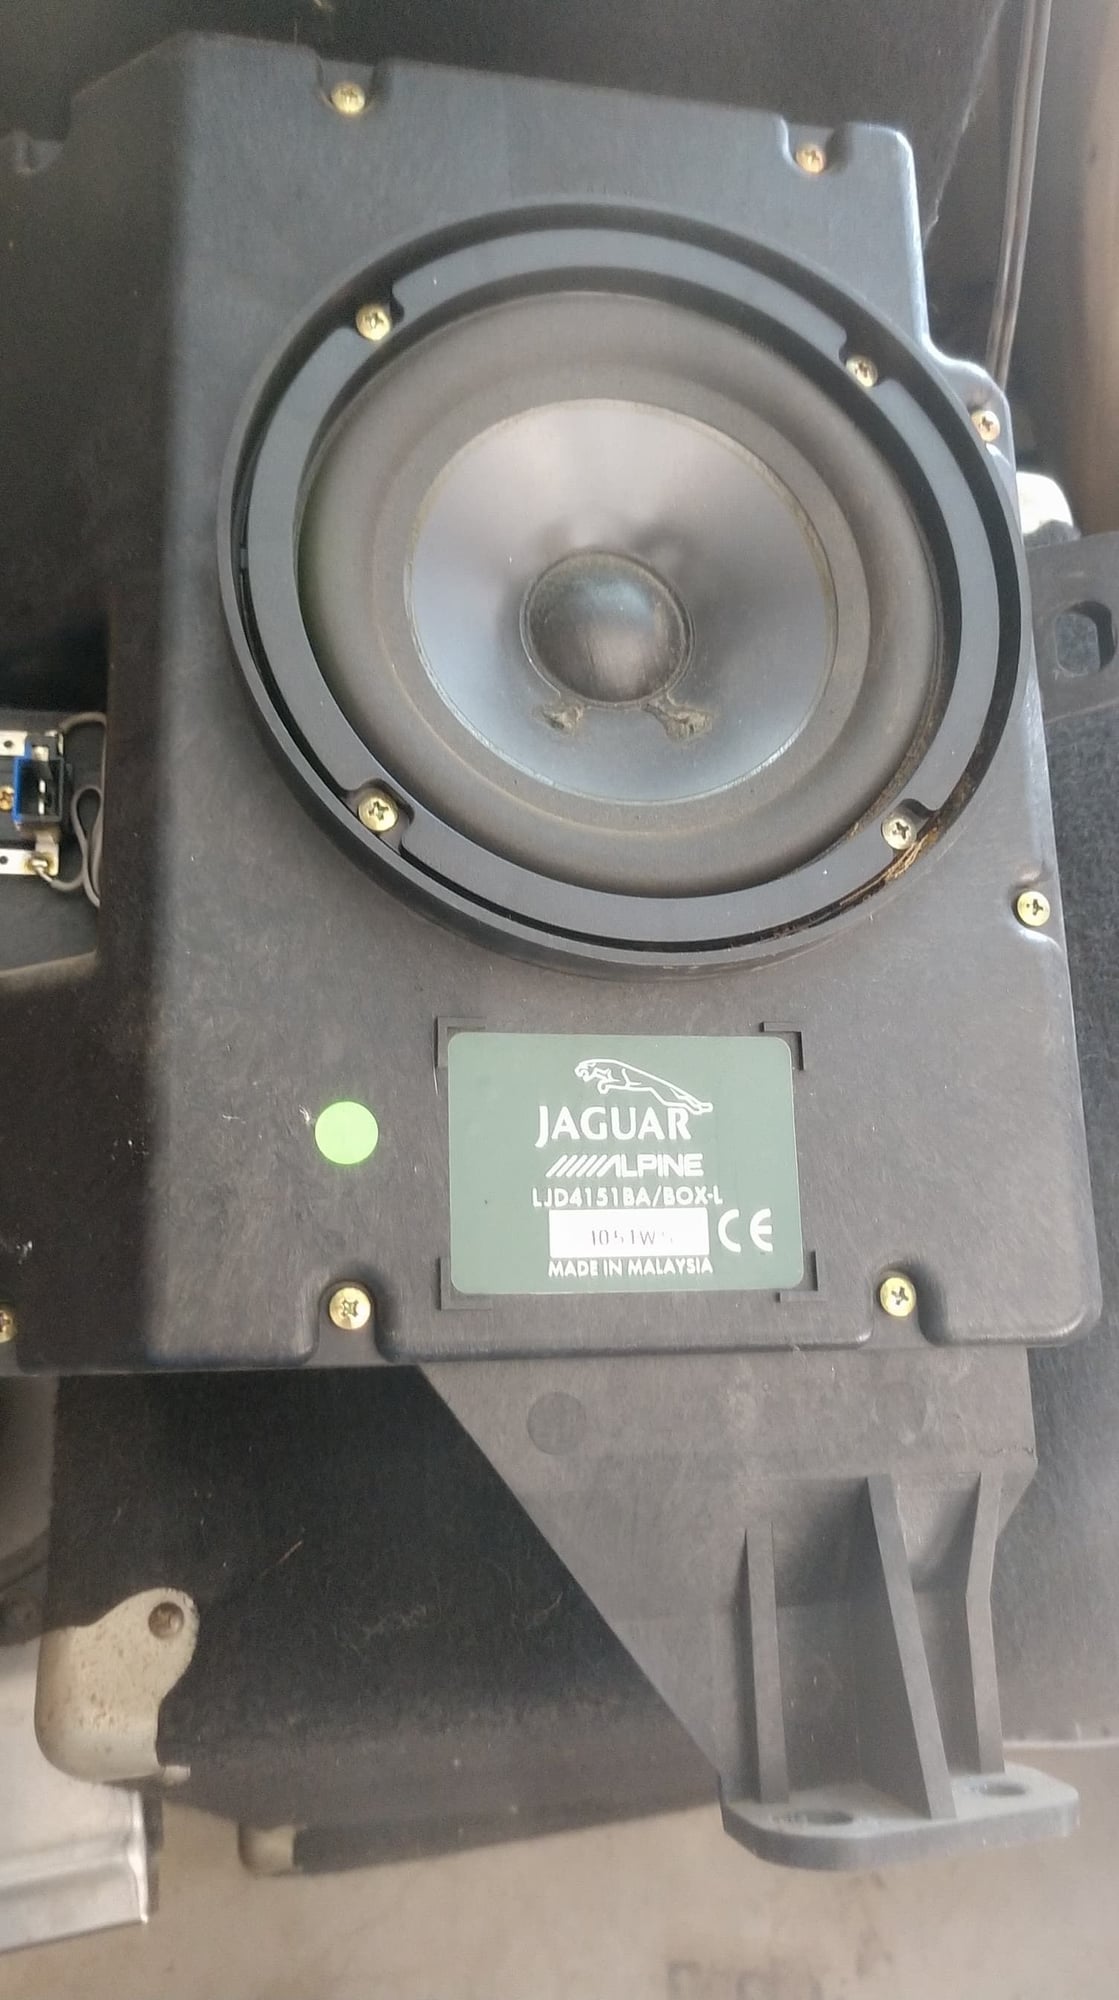 2001 Jaguar XKR -  - Lago Vista, TX 78645, United States